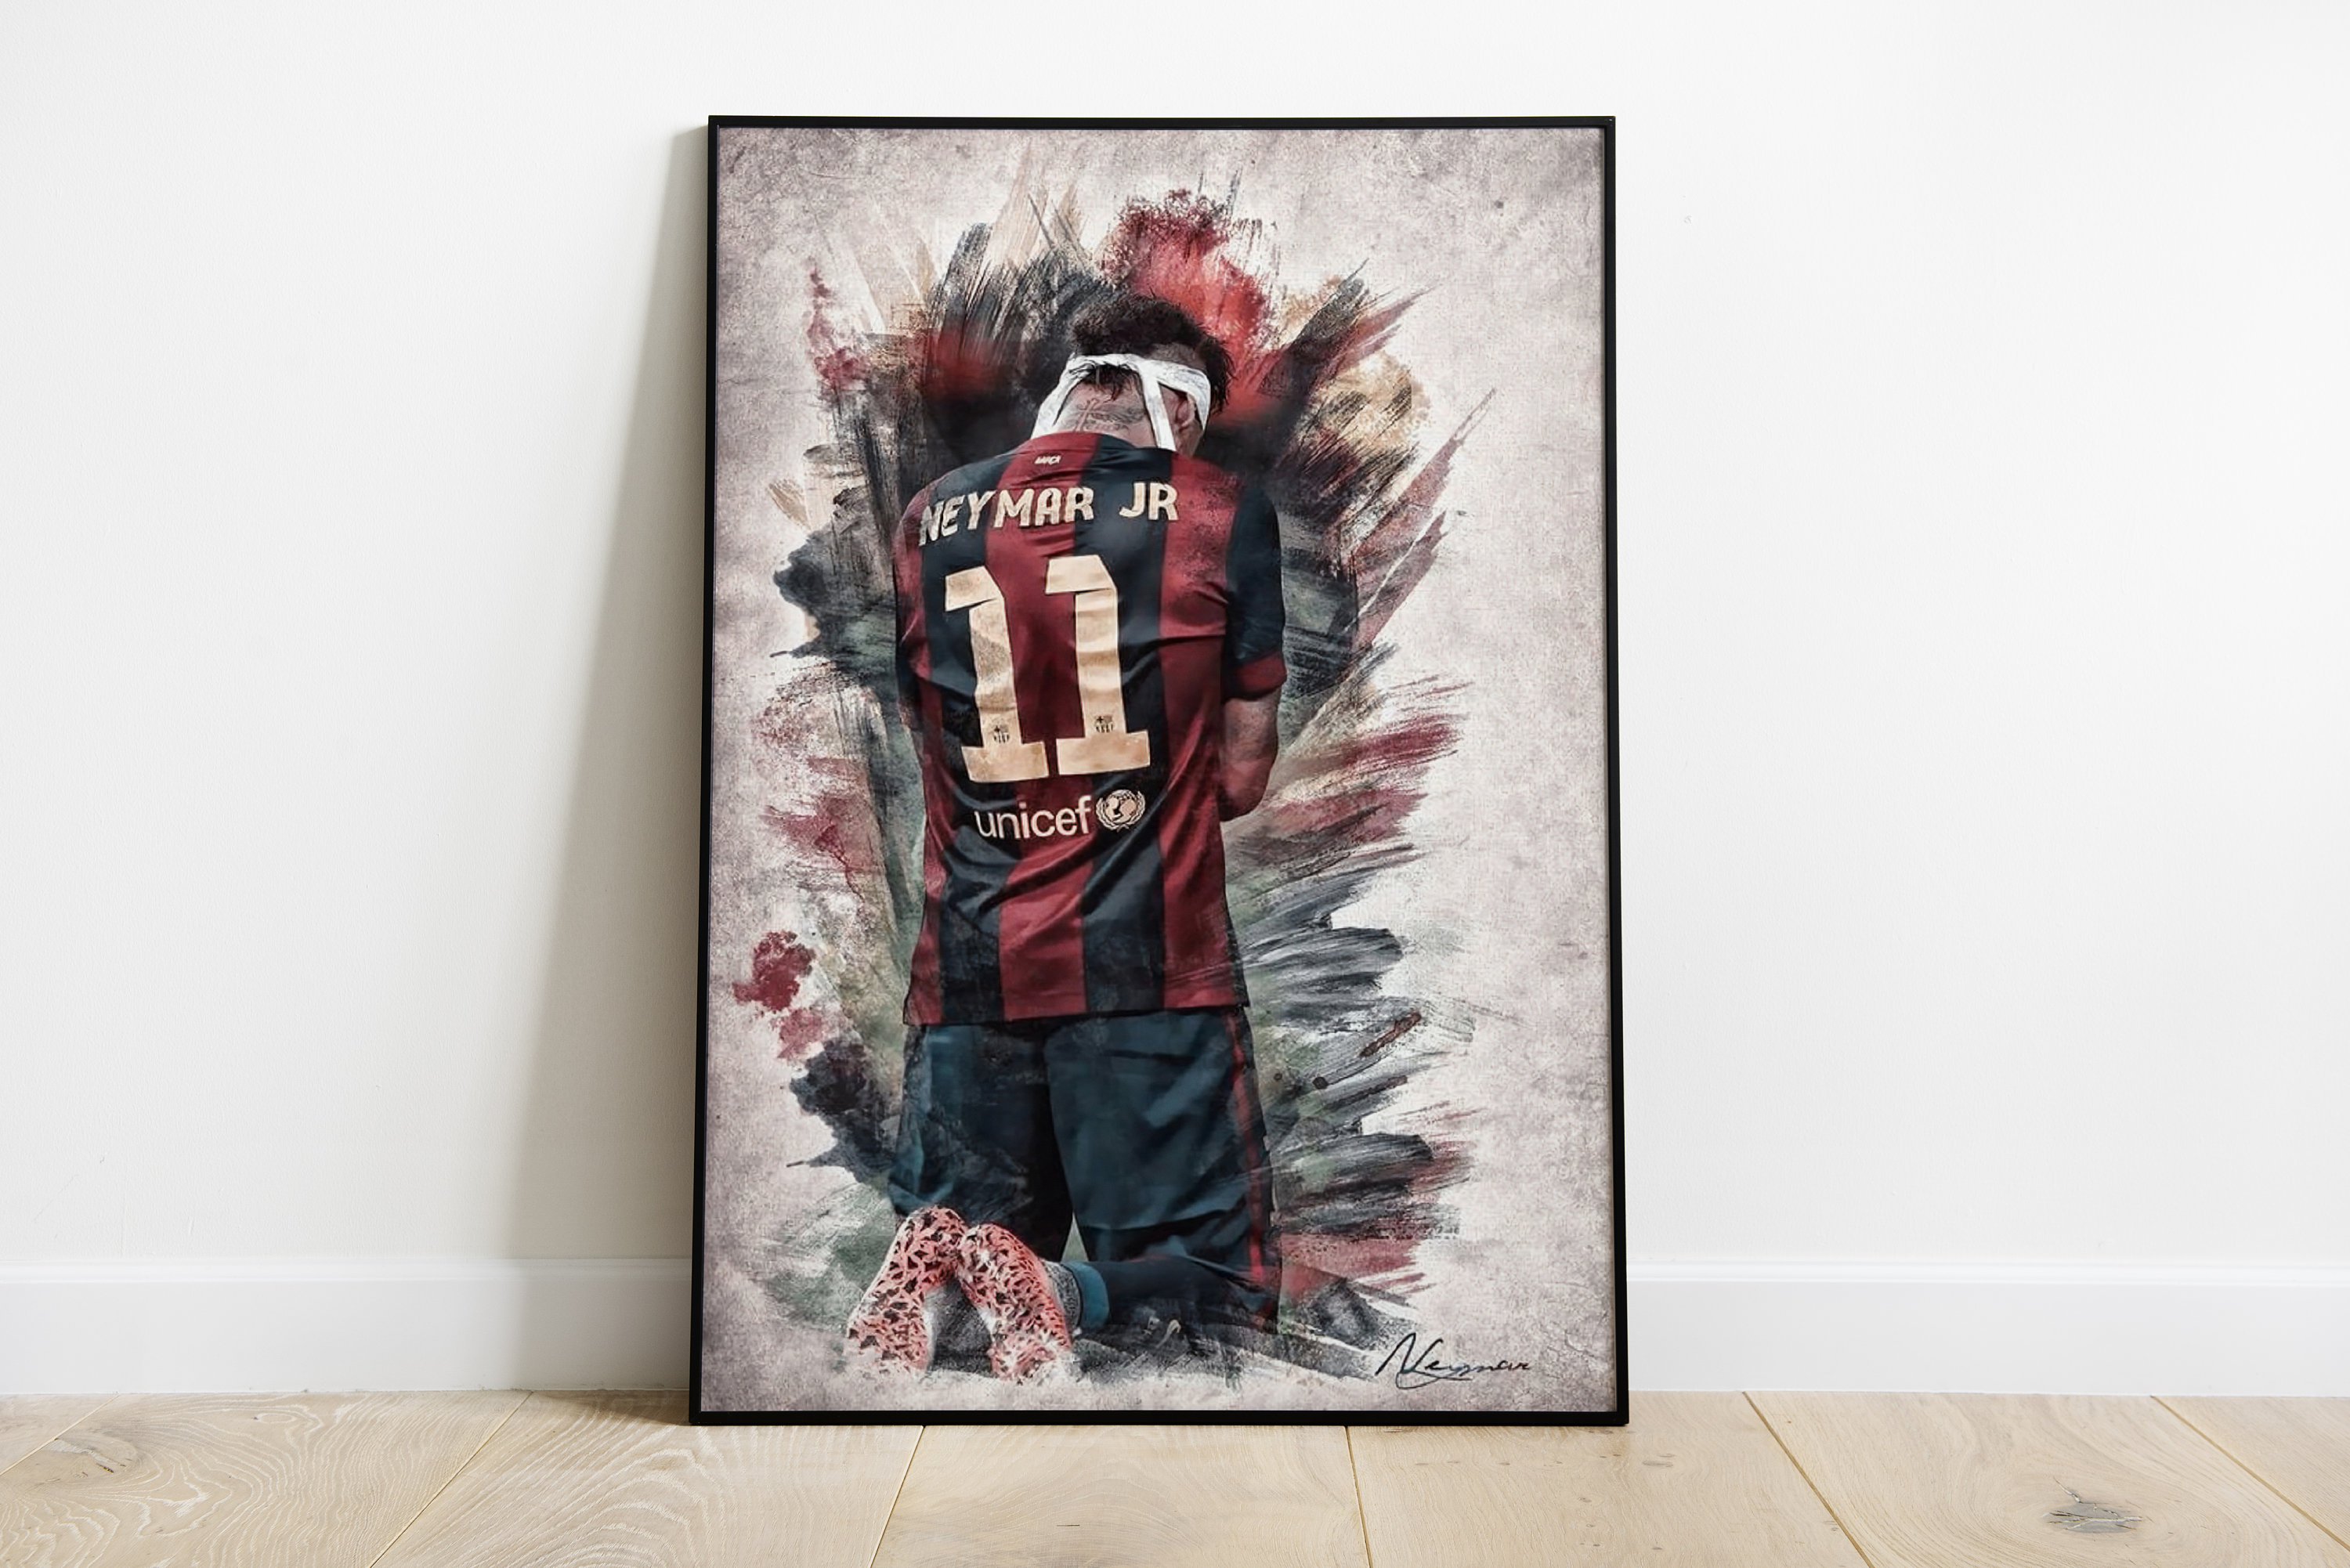  Neymar Brazil Legend Football Player Art Poster (30) Room  Aesthetic Tapestry Print Art Wall Painting Tapestries Gifts Modern Bedroom  Decor 40x60 : Home & Kitchen